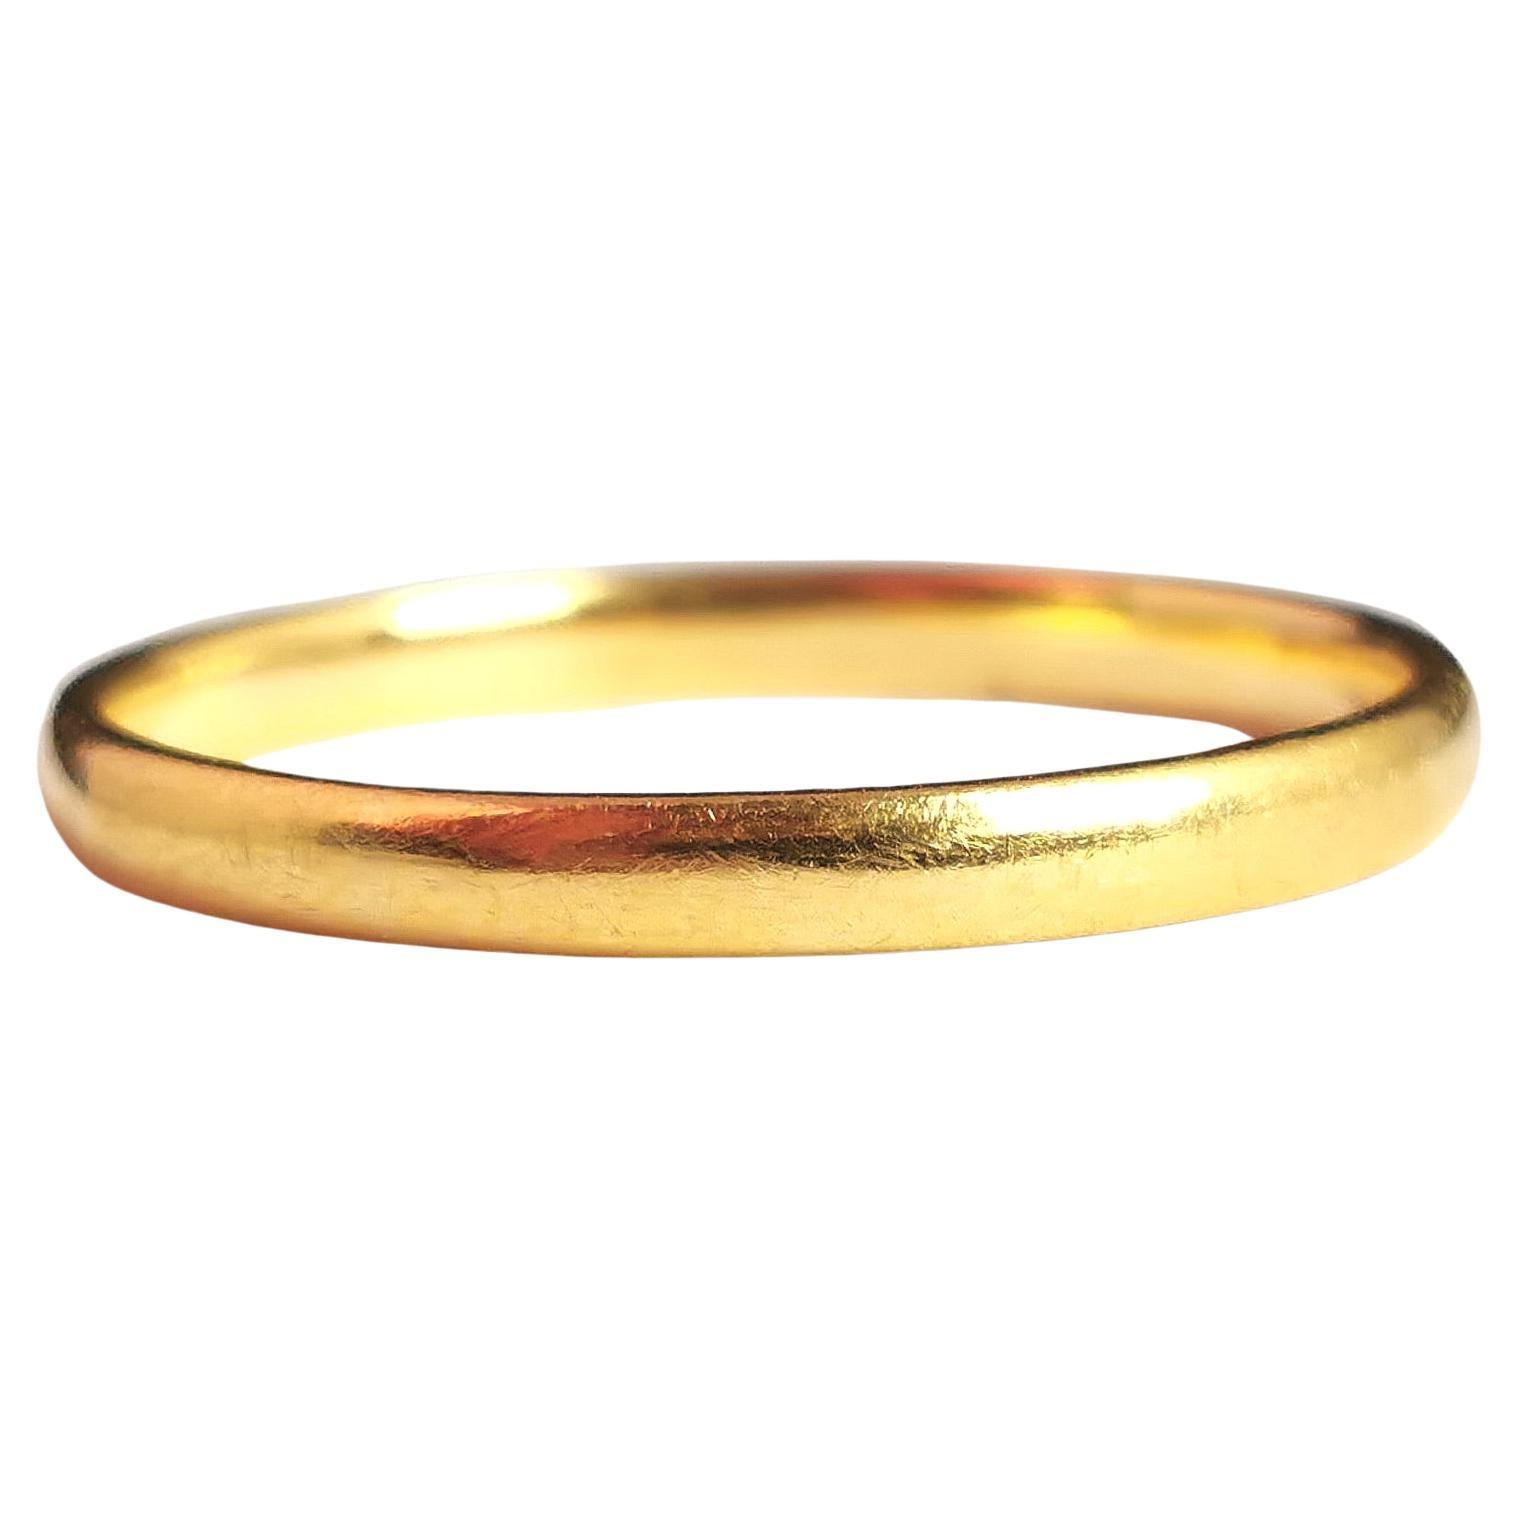 Vintage 22k yellow gold band ring, wedding, 1930's 